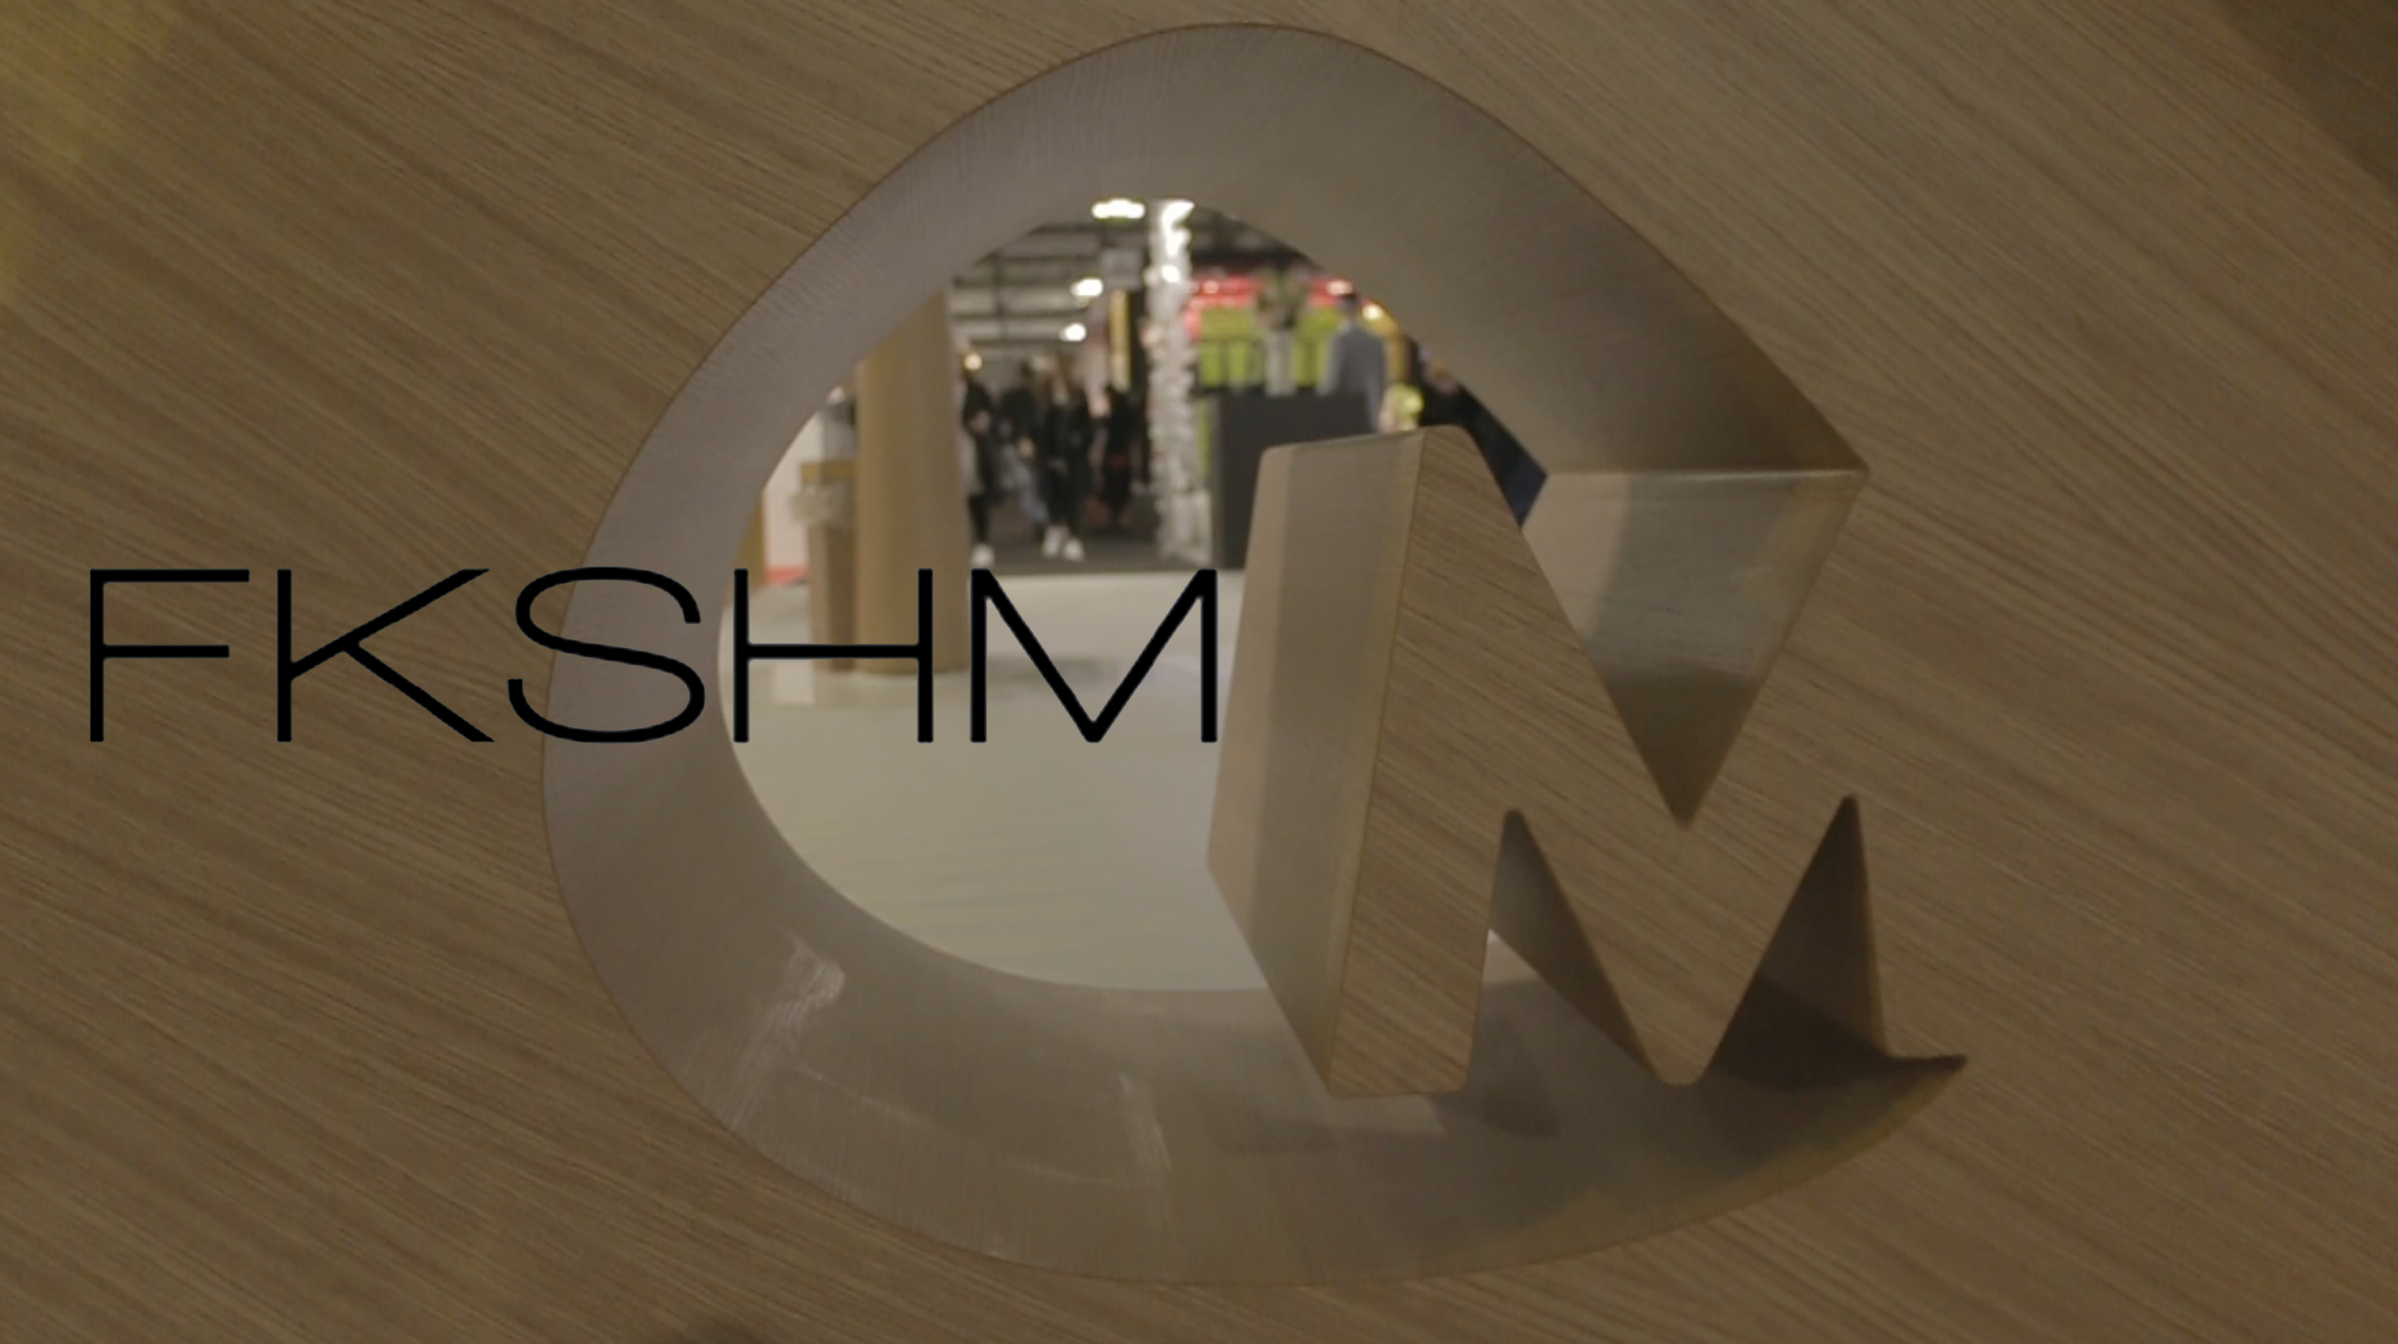 Vu au Mido : Fakoshima lance FKSHM, "une marque futuriste, avant-gardiste et techno" (5/6)